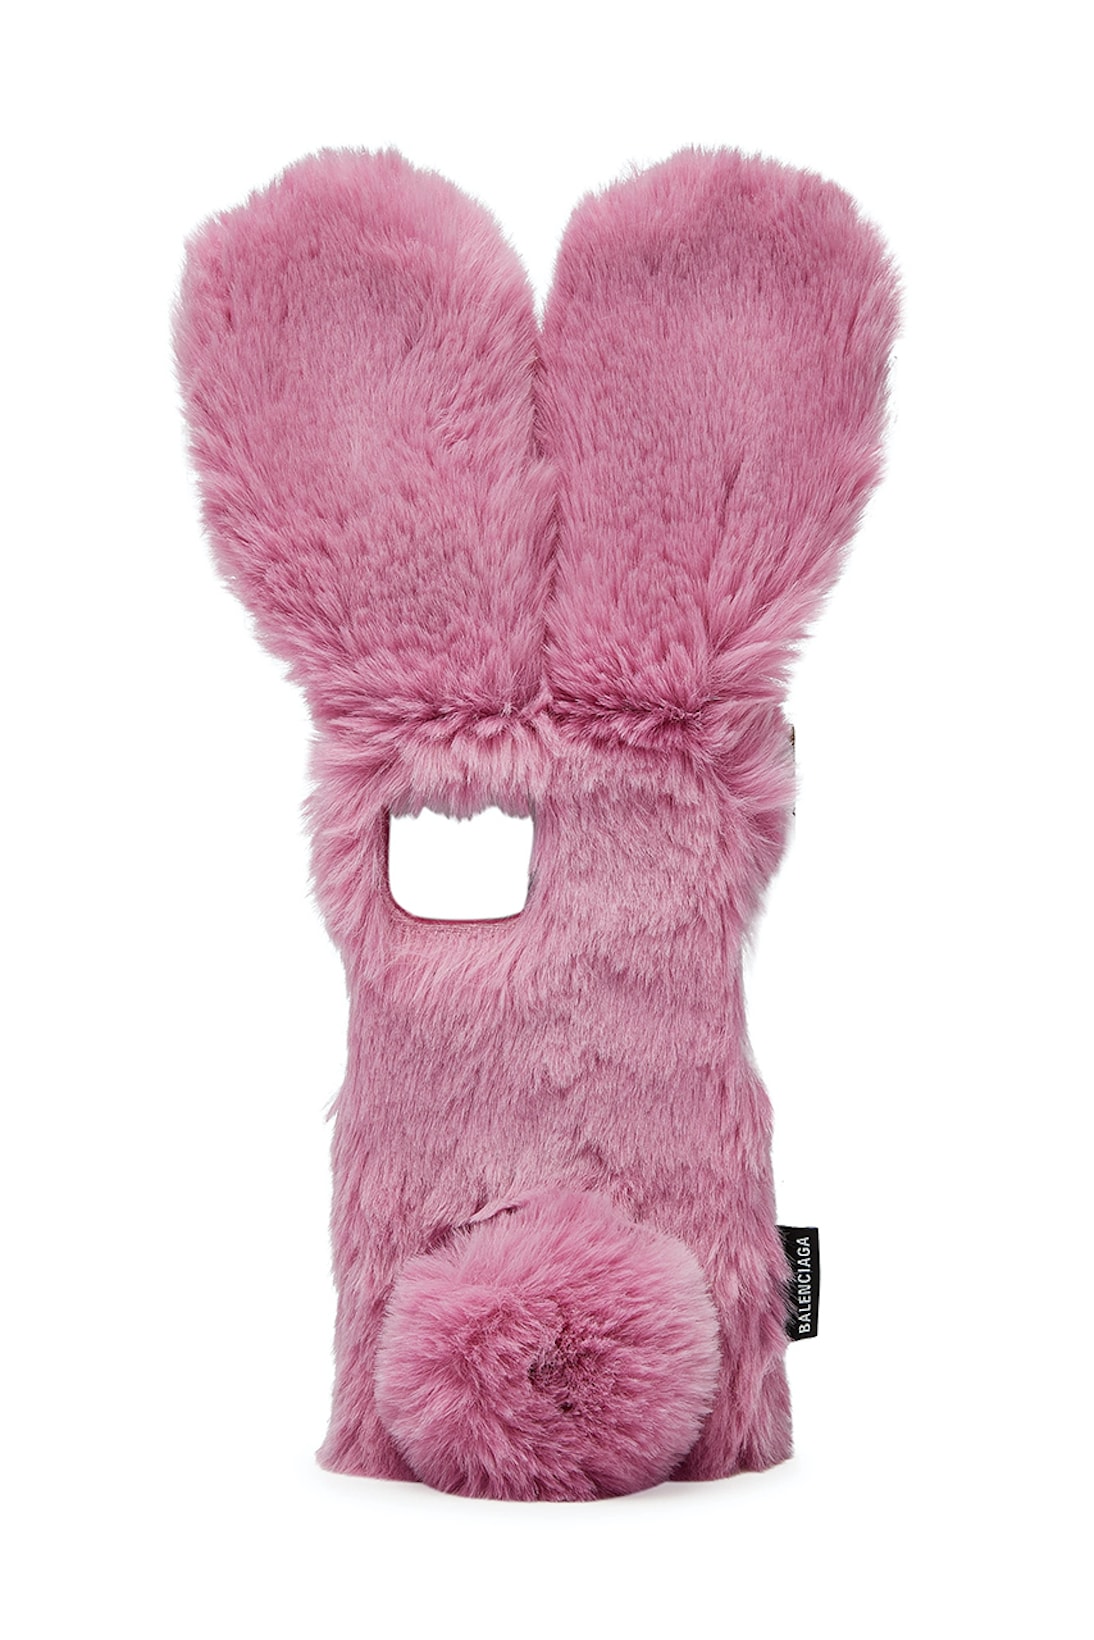 Balenciaga Pink Bunny Apple iPhone Cases Faux Fur